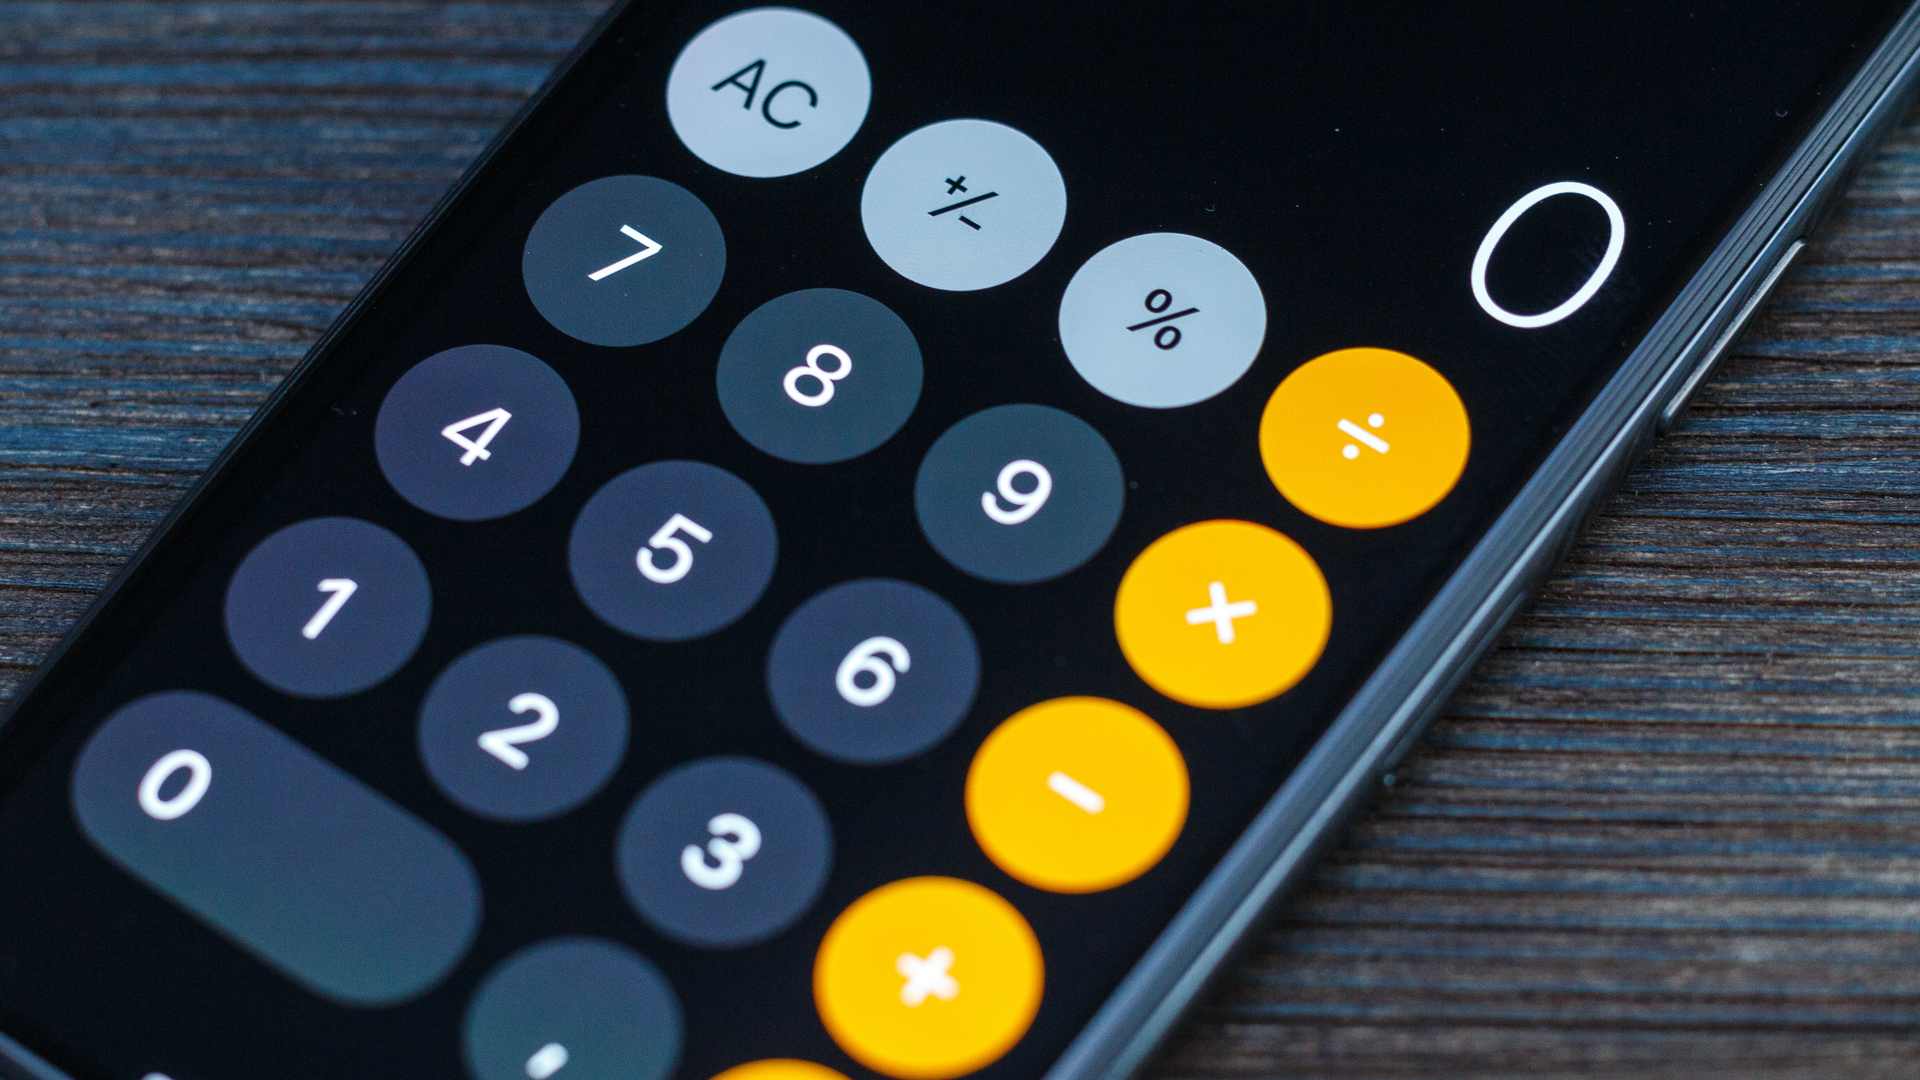 Secret calculator app for iphone